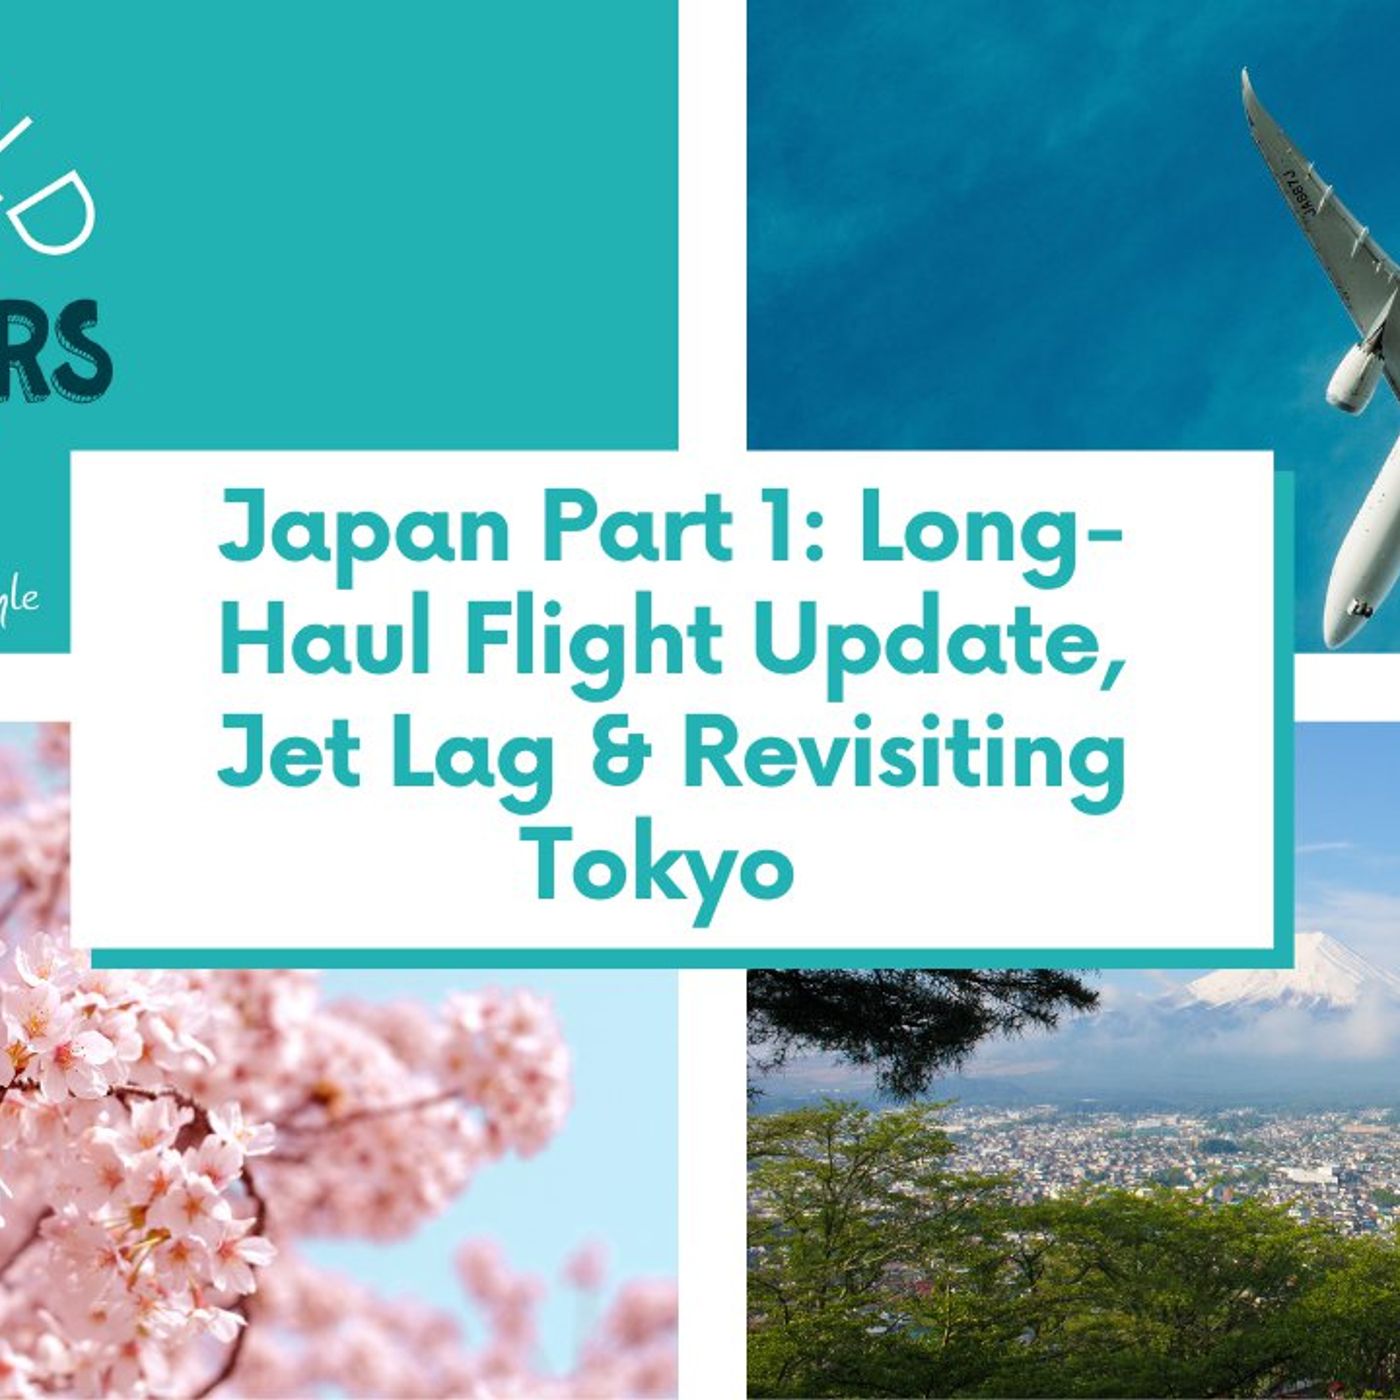 Japan Part 1: Long-Haul Flight Update, Jet Lag & Revisiting Tokyo